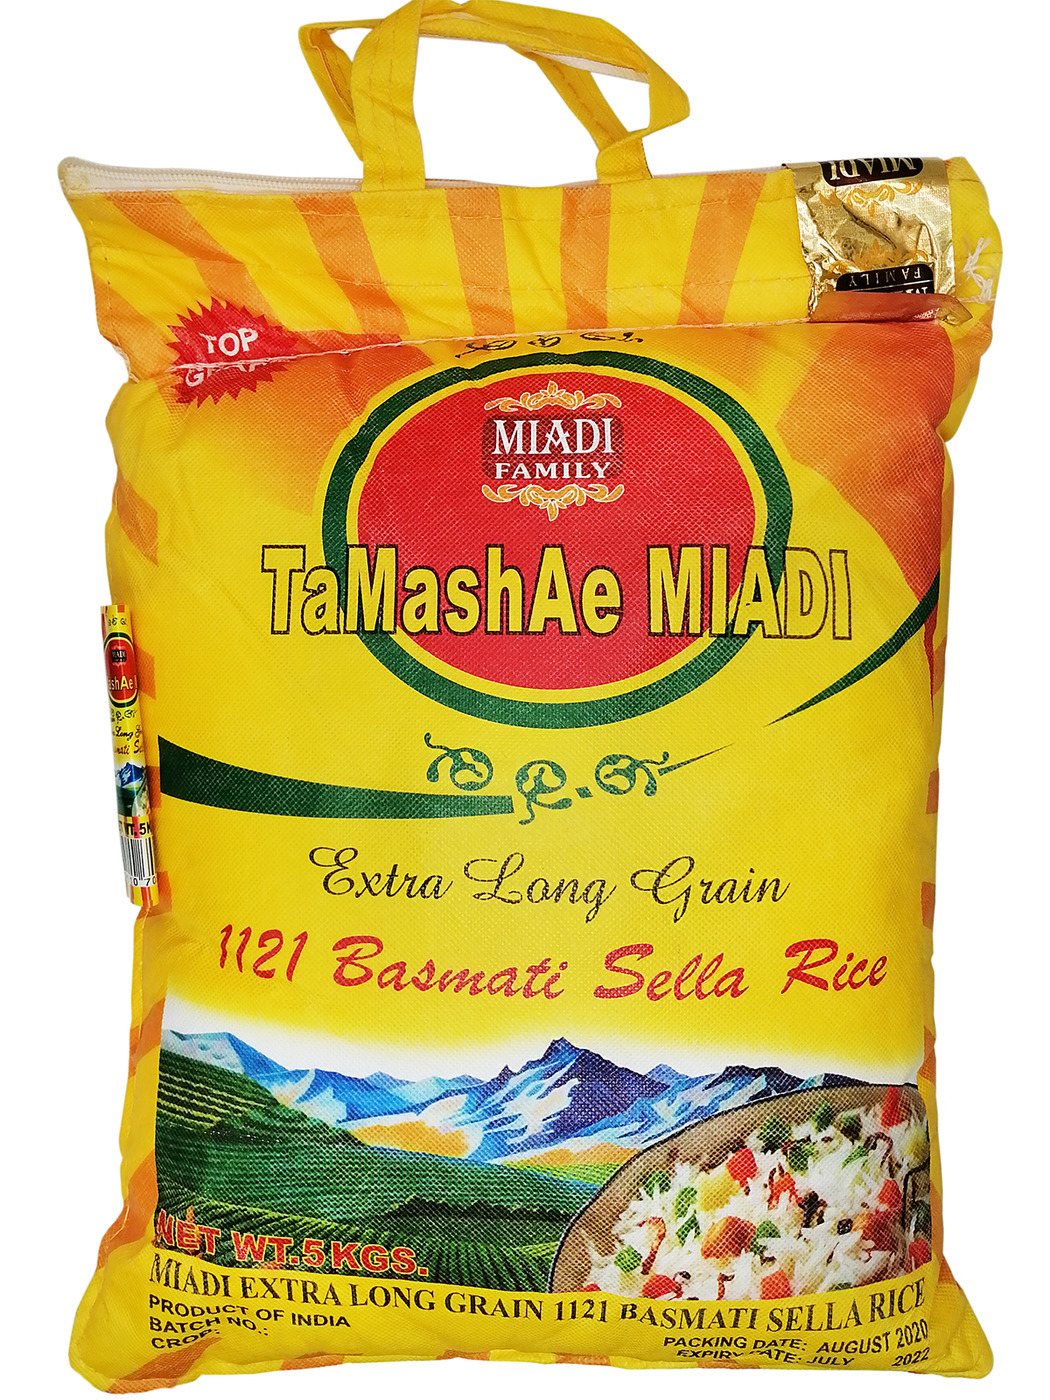 Купить басмати 5 кг. Basmati рис Индия 5 кг. Рис басмати, Индия - 2 кг. Рис басмати Экстра Tamashae miadi, 2кг. Рис индийский басмати 1 кг.